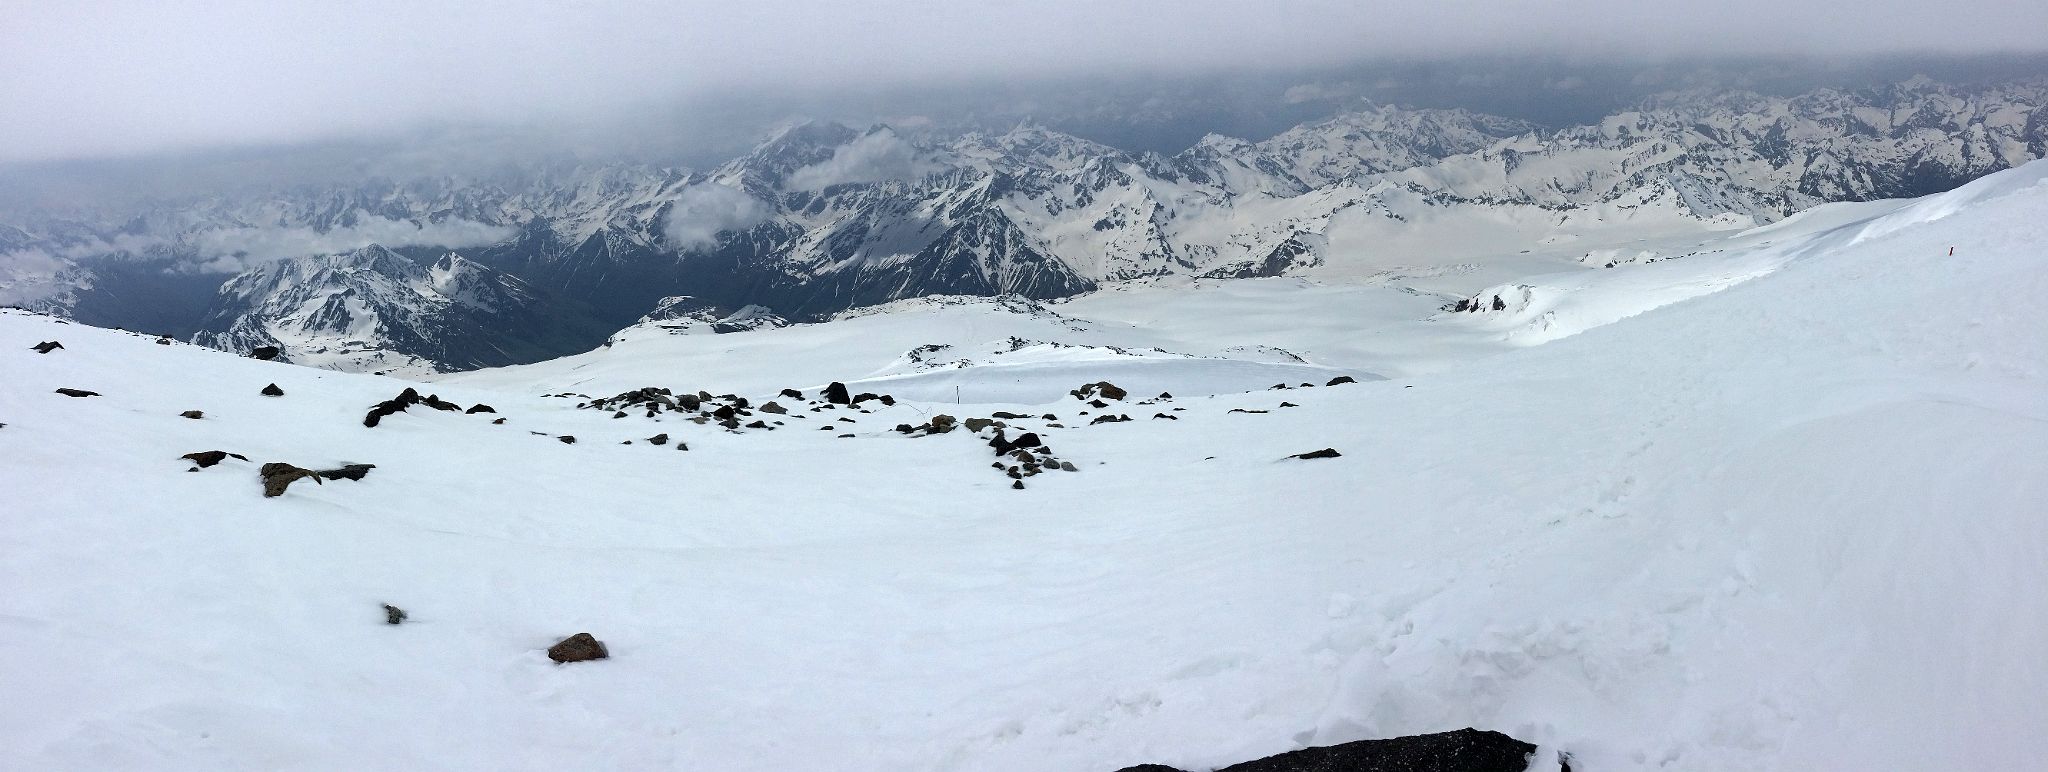 09A Panoramic View Of Mounts Donguz-Orun, Cheget, Shdavleri From Pastukhov Rocks 4700m On The Mount Elbrus Climb